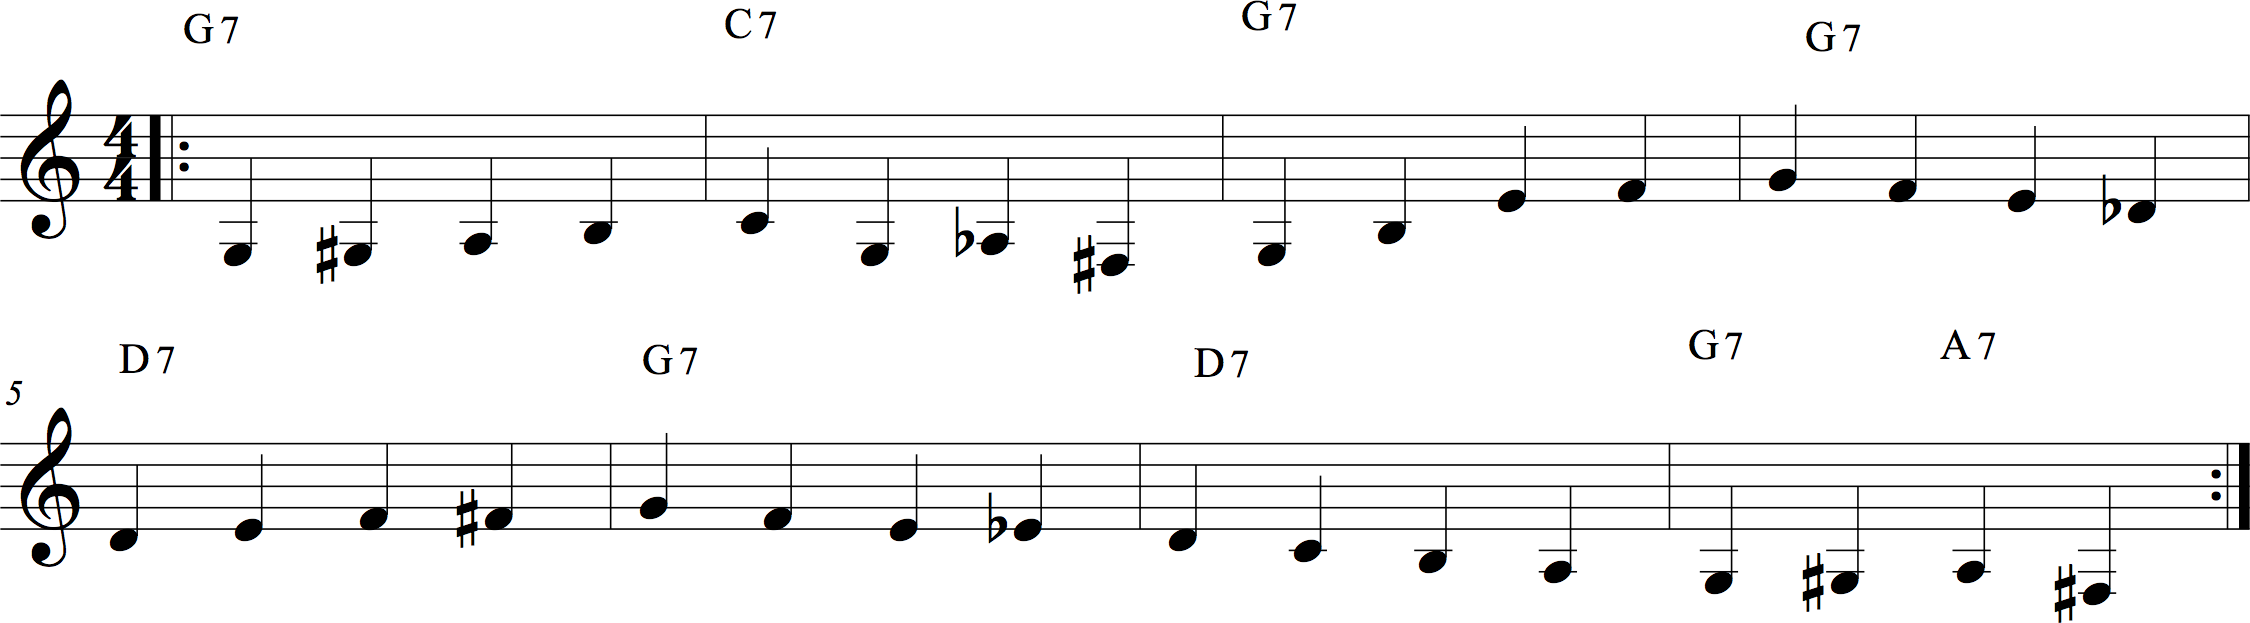 Walking bass example using an 8-bar blues progression.